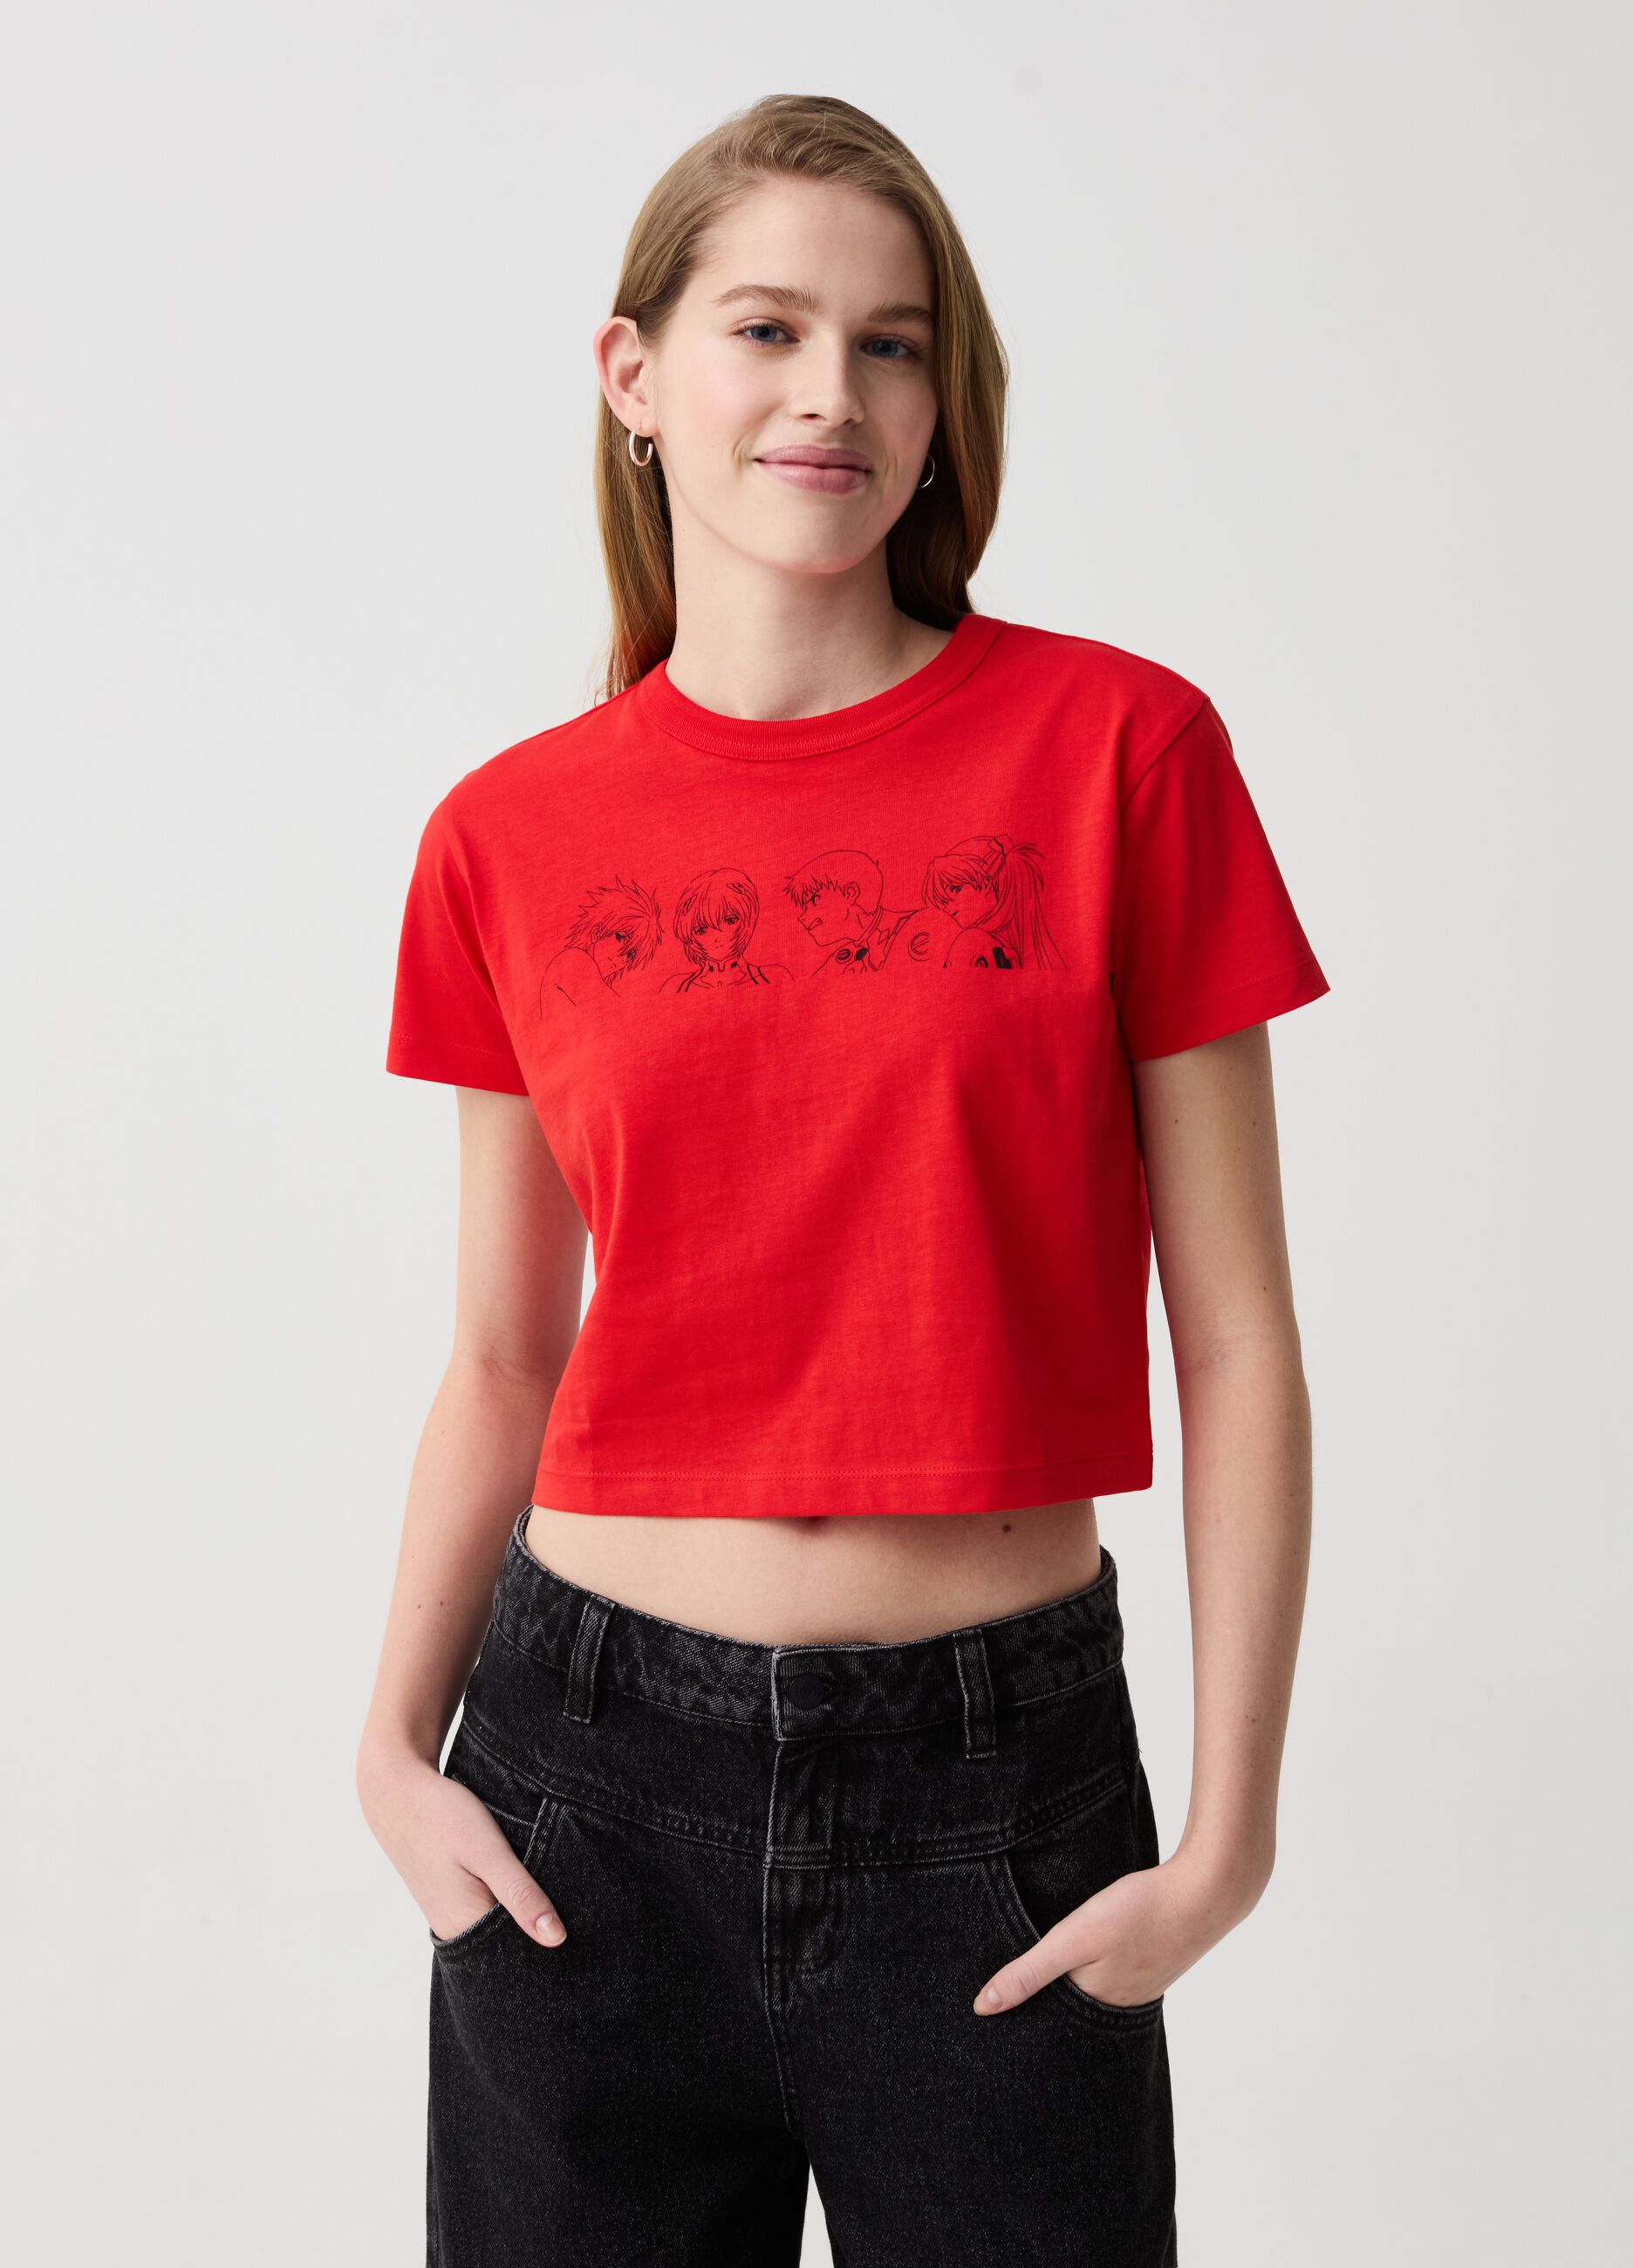 Crop T-shirt with Neon Genesis Evangelion print